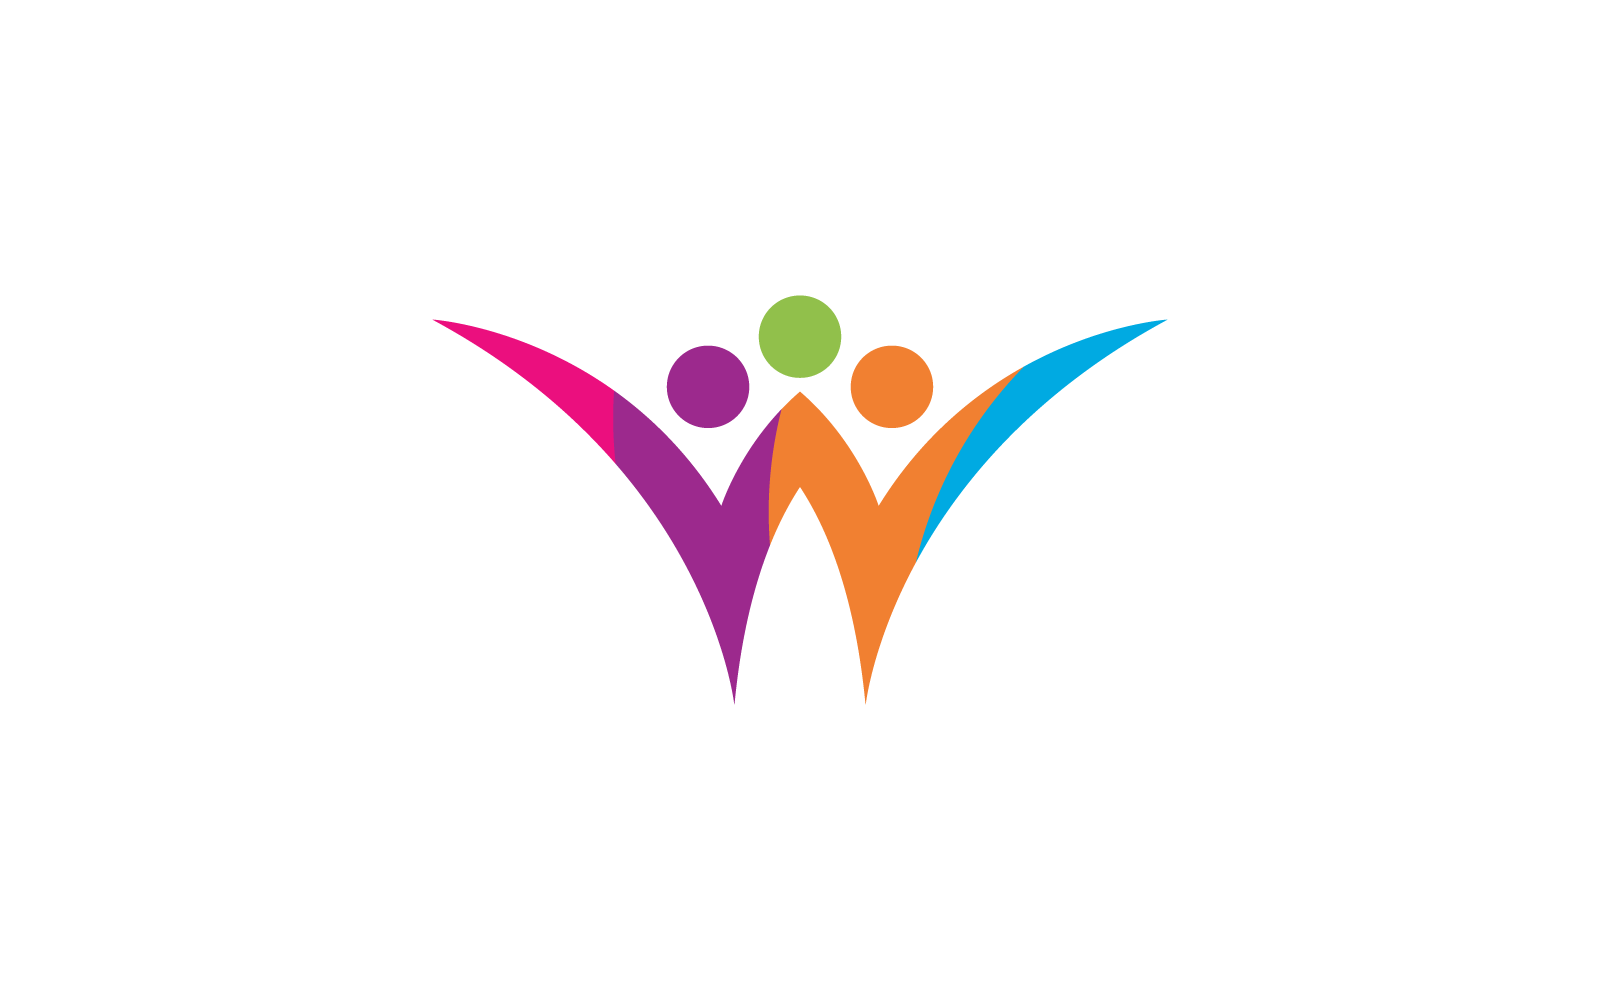 V W initial Community, network and social logo design